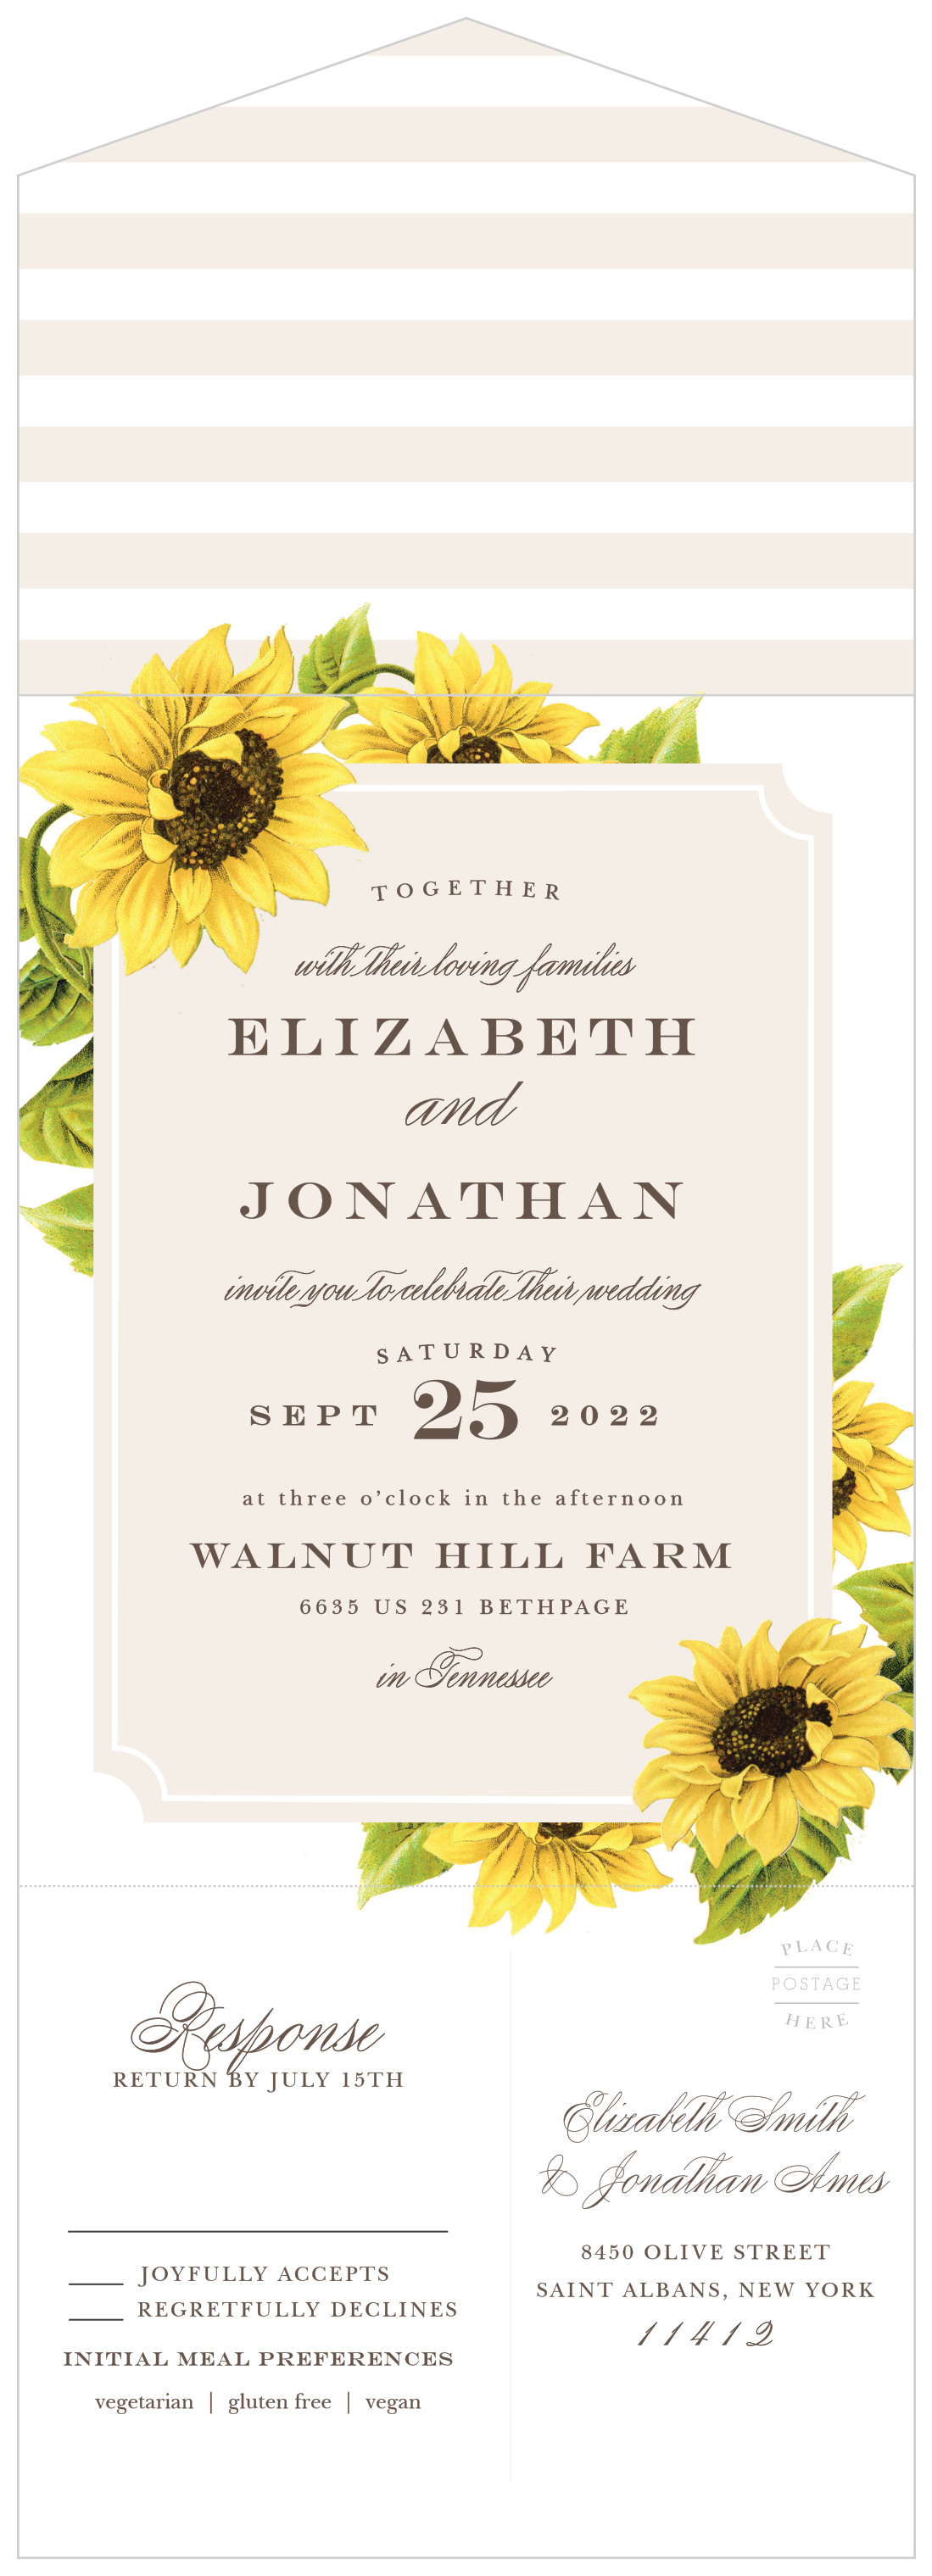 Sunflower Frame Seal & Send Wedding Invitations